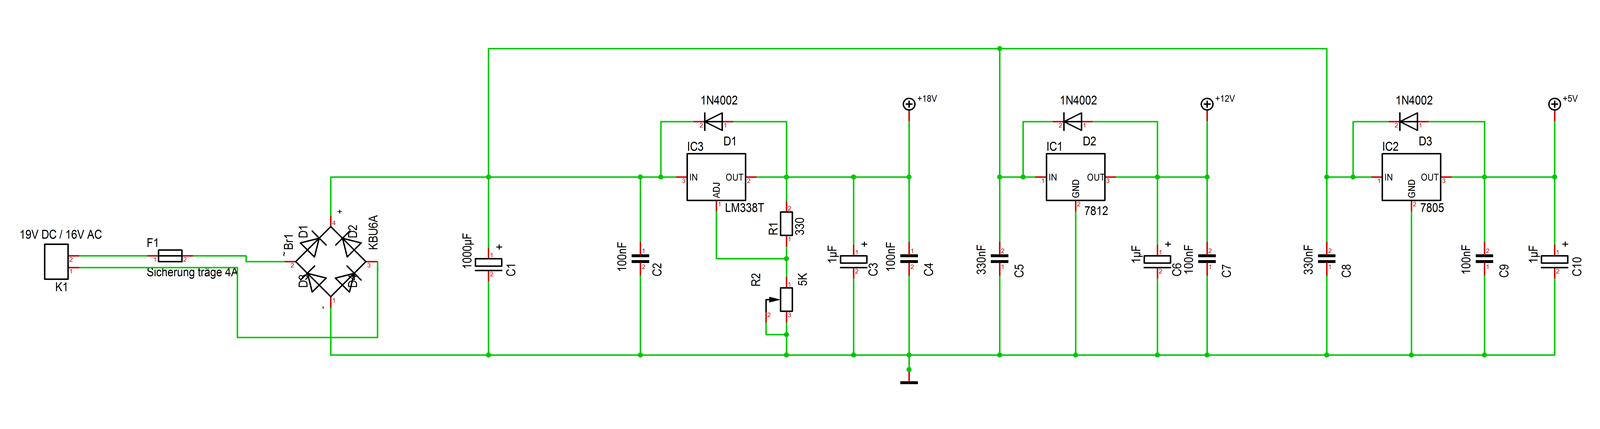 Spannungsregelung regelbar, 5V und 12V - Mikrocontroller.net